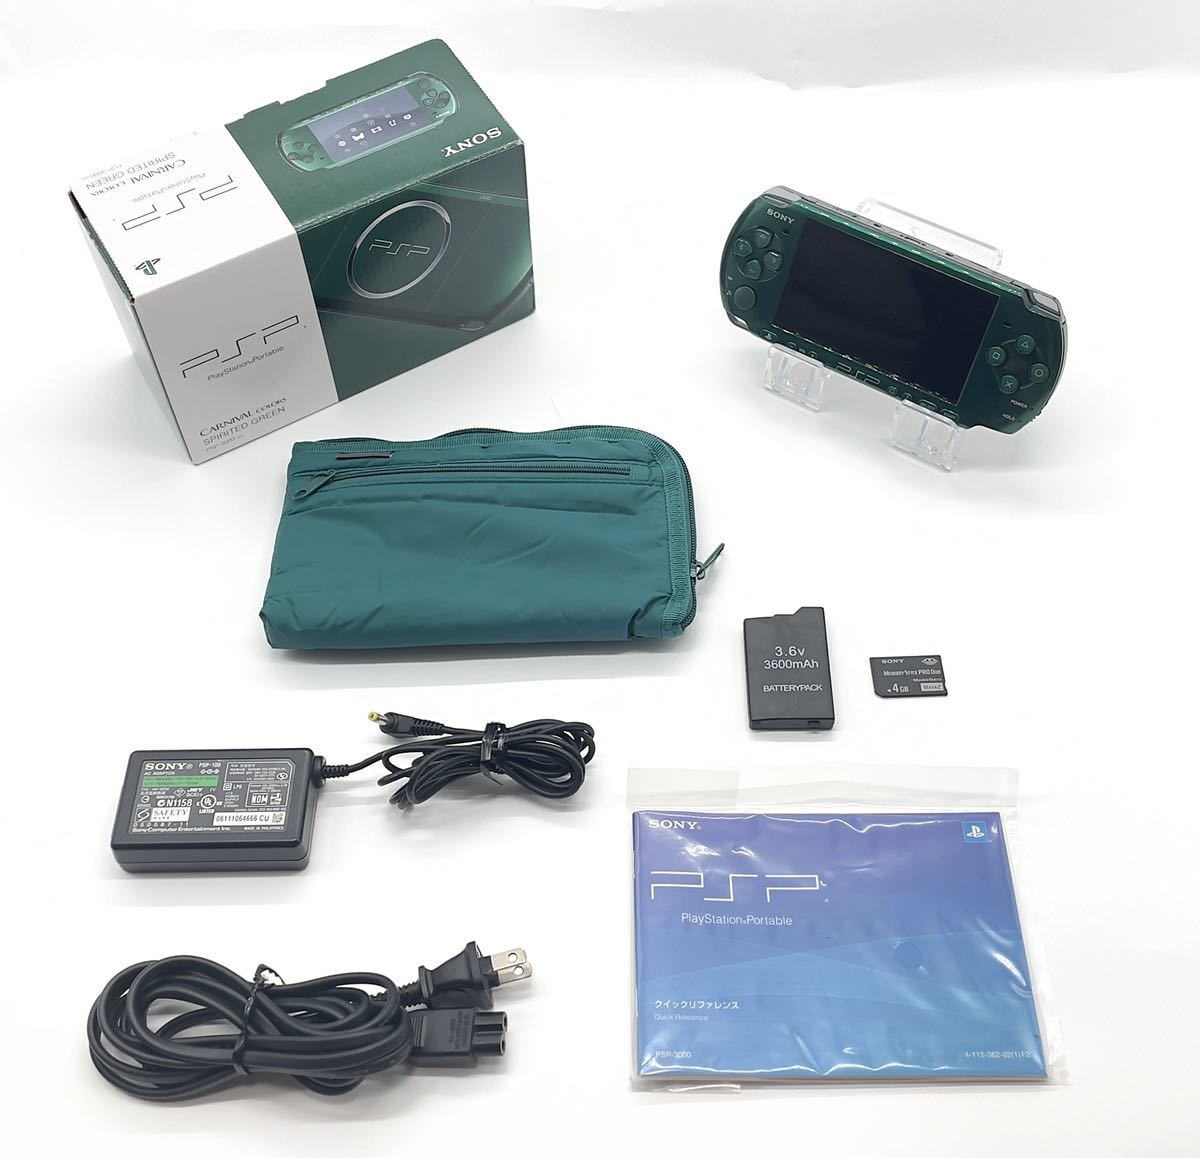 Psp-3000sg PSP Playstation Portable Spirited Green 